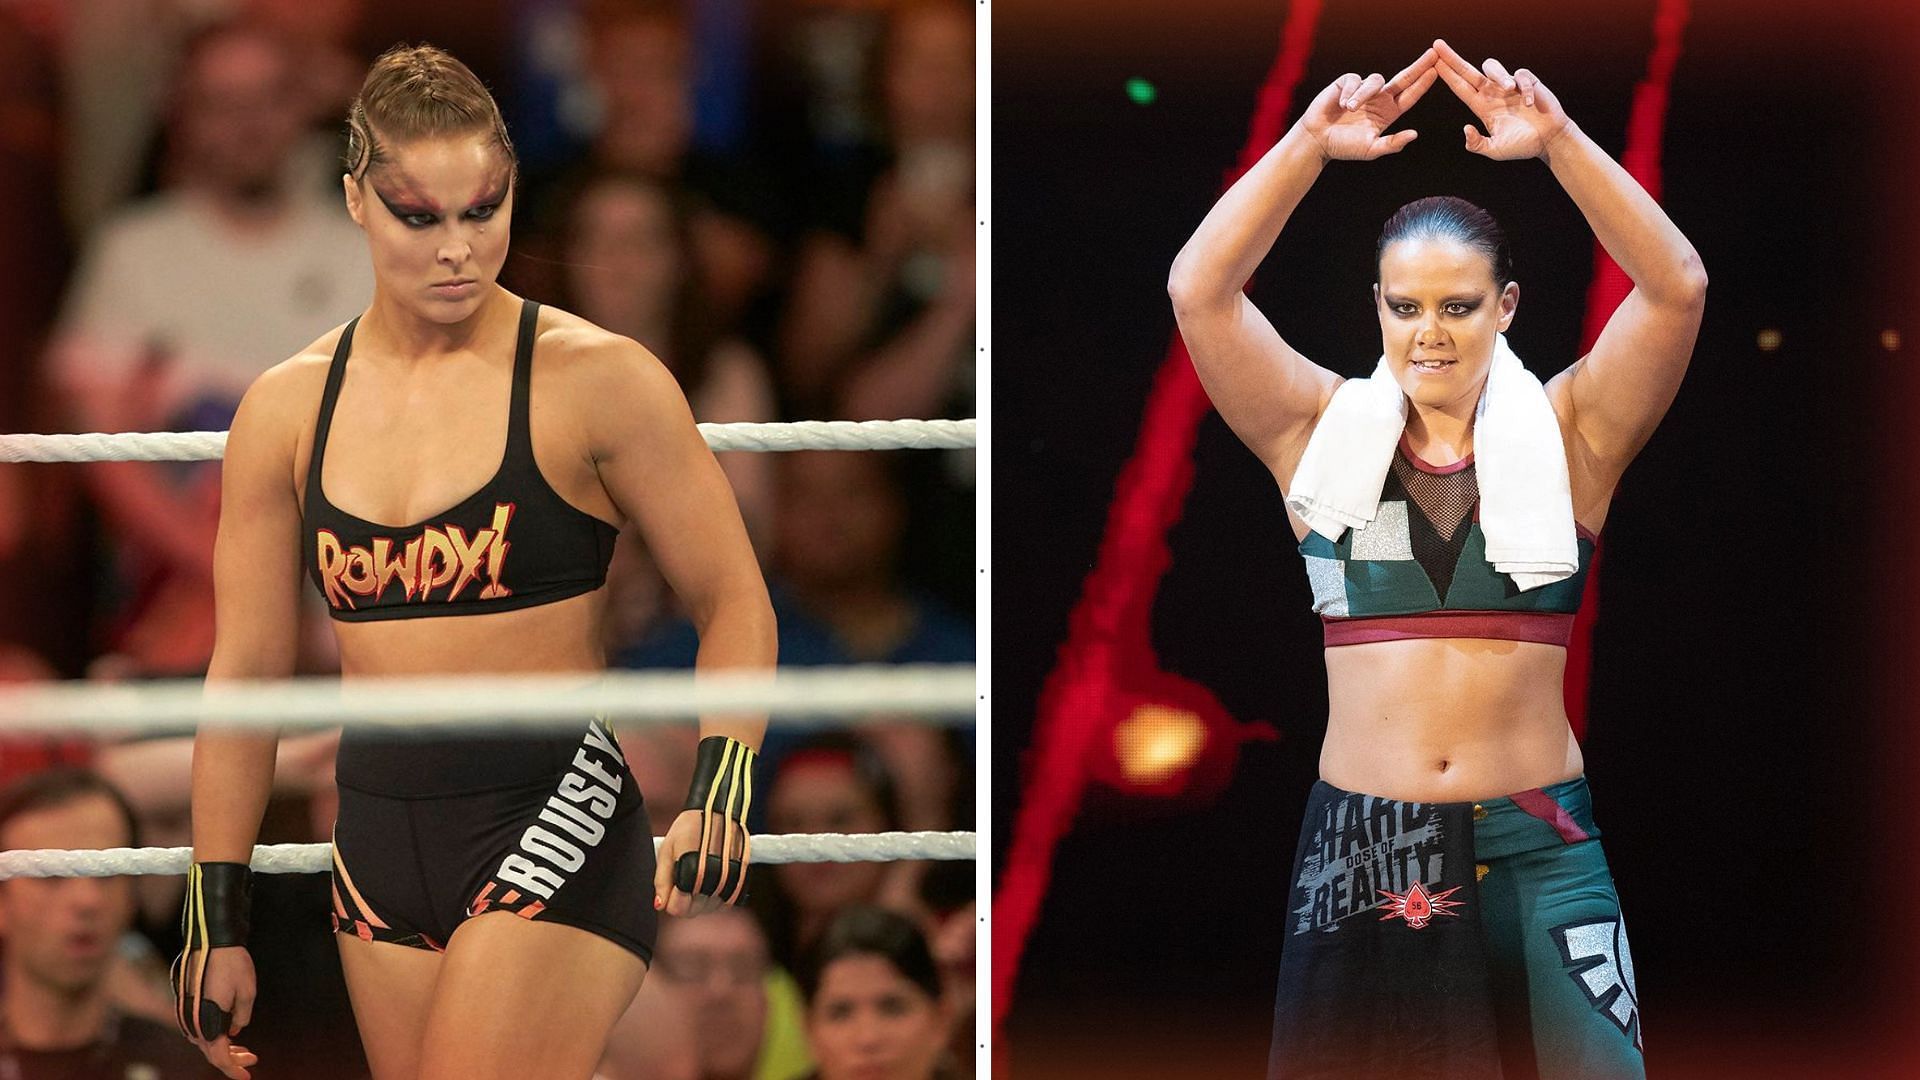 Shayna Baszler and Ronda Rousey taking on SmackDown women